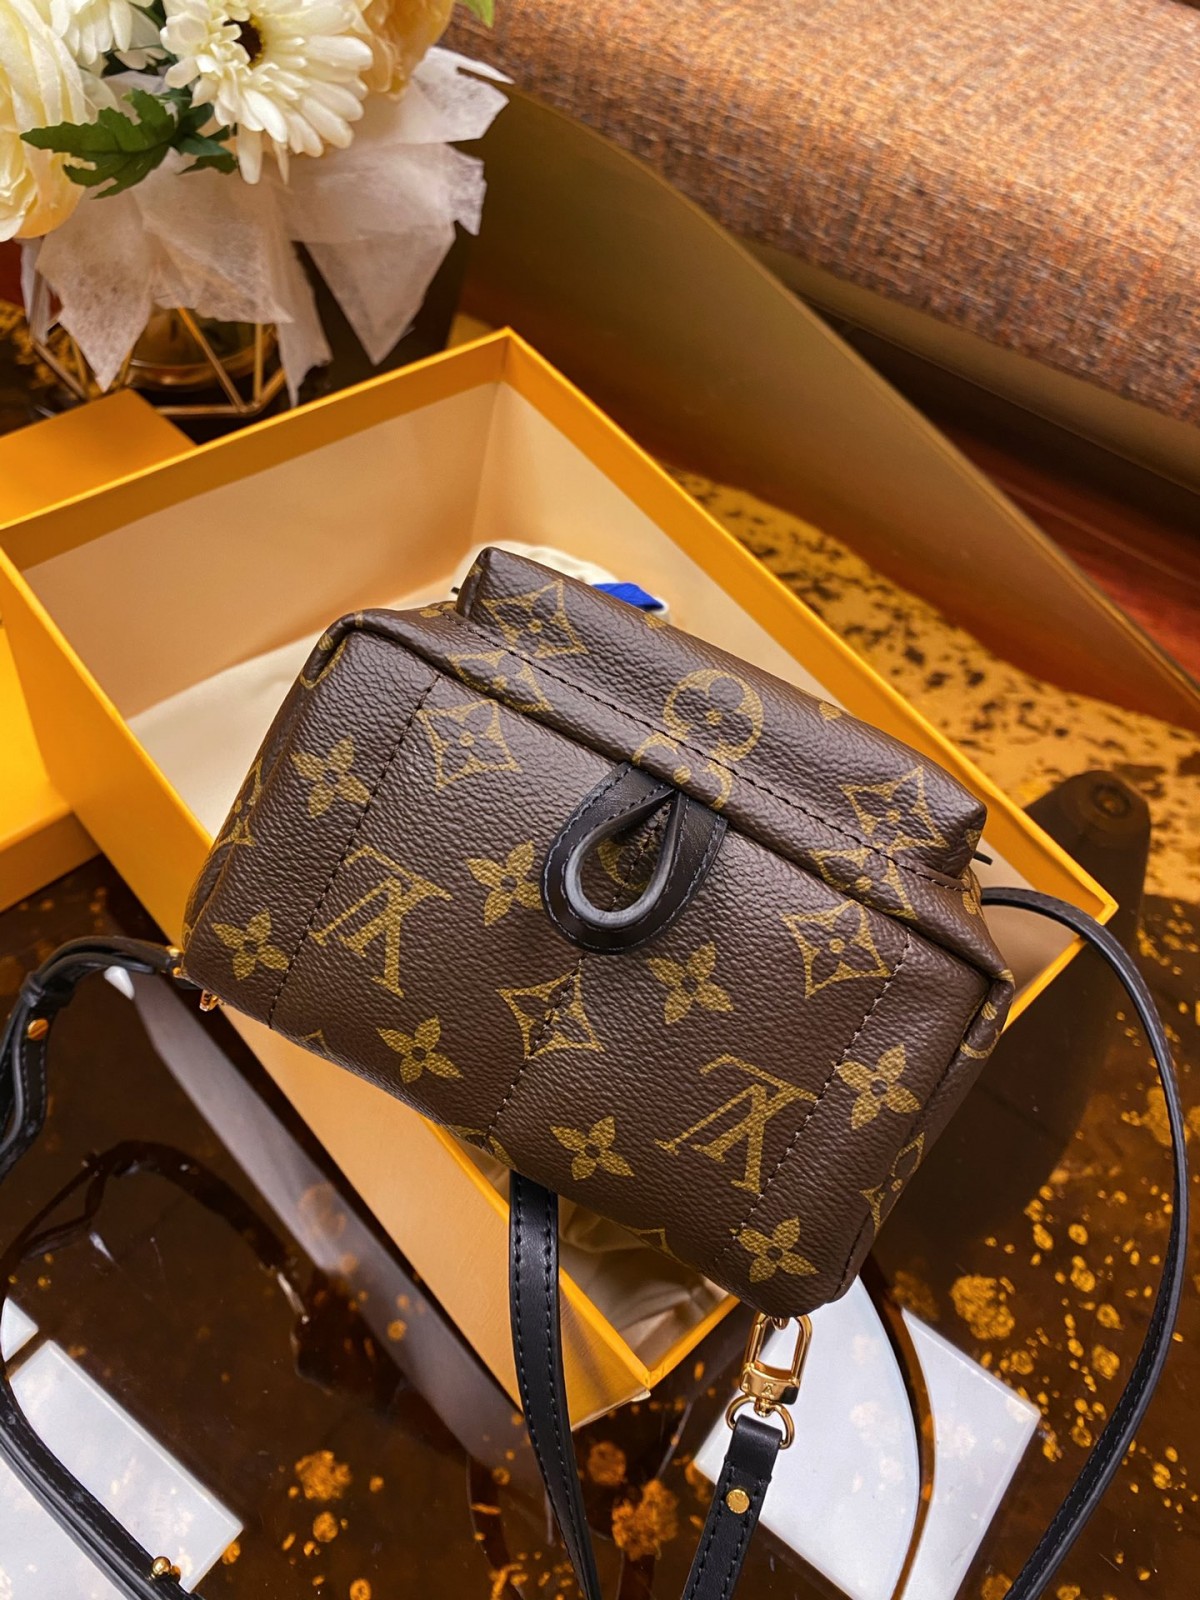 Louis Vuitton bags backpack replica reviews (2022 Updated)-Best Quality Fake Louis Vuitton Bag آن لائن اسٽور، Replica designer bag ru